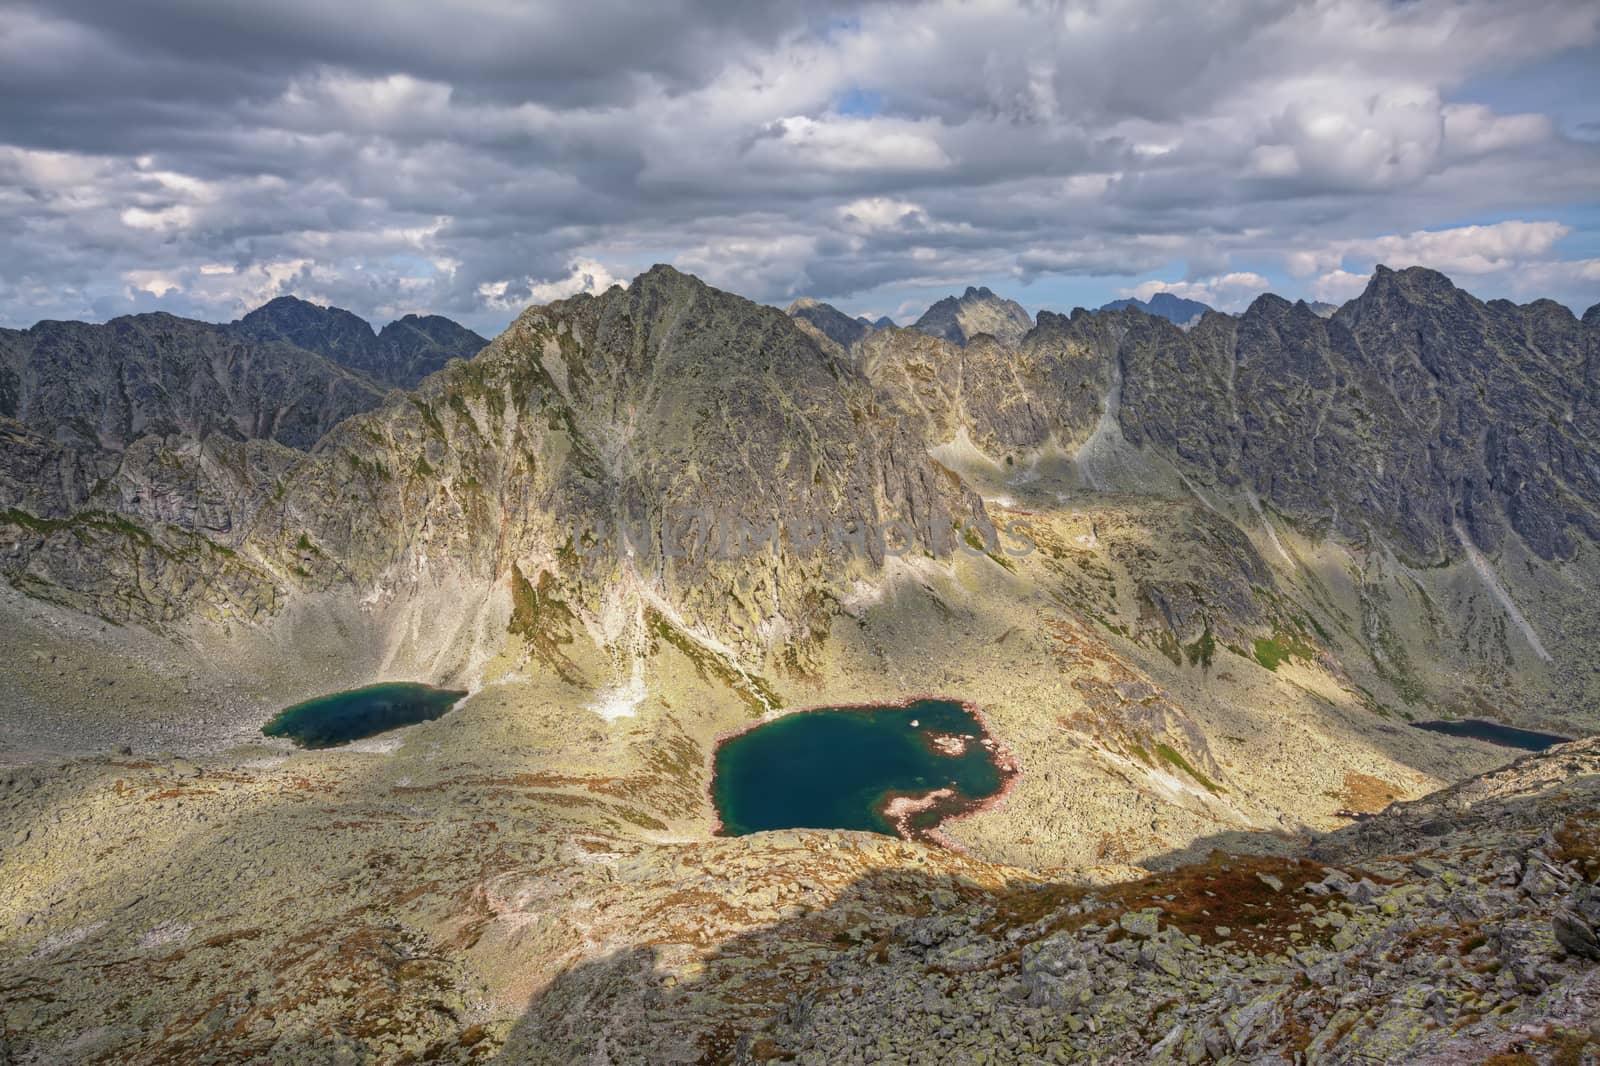 Photo of Mlynicka dolina and Capie pleso lake in High Tatra Mountains, Slovakia, Europe by igor_stramyk